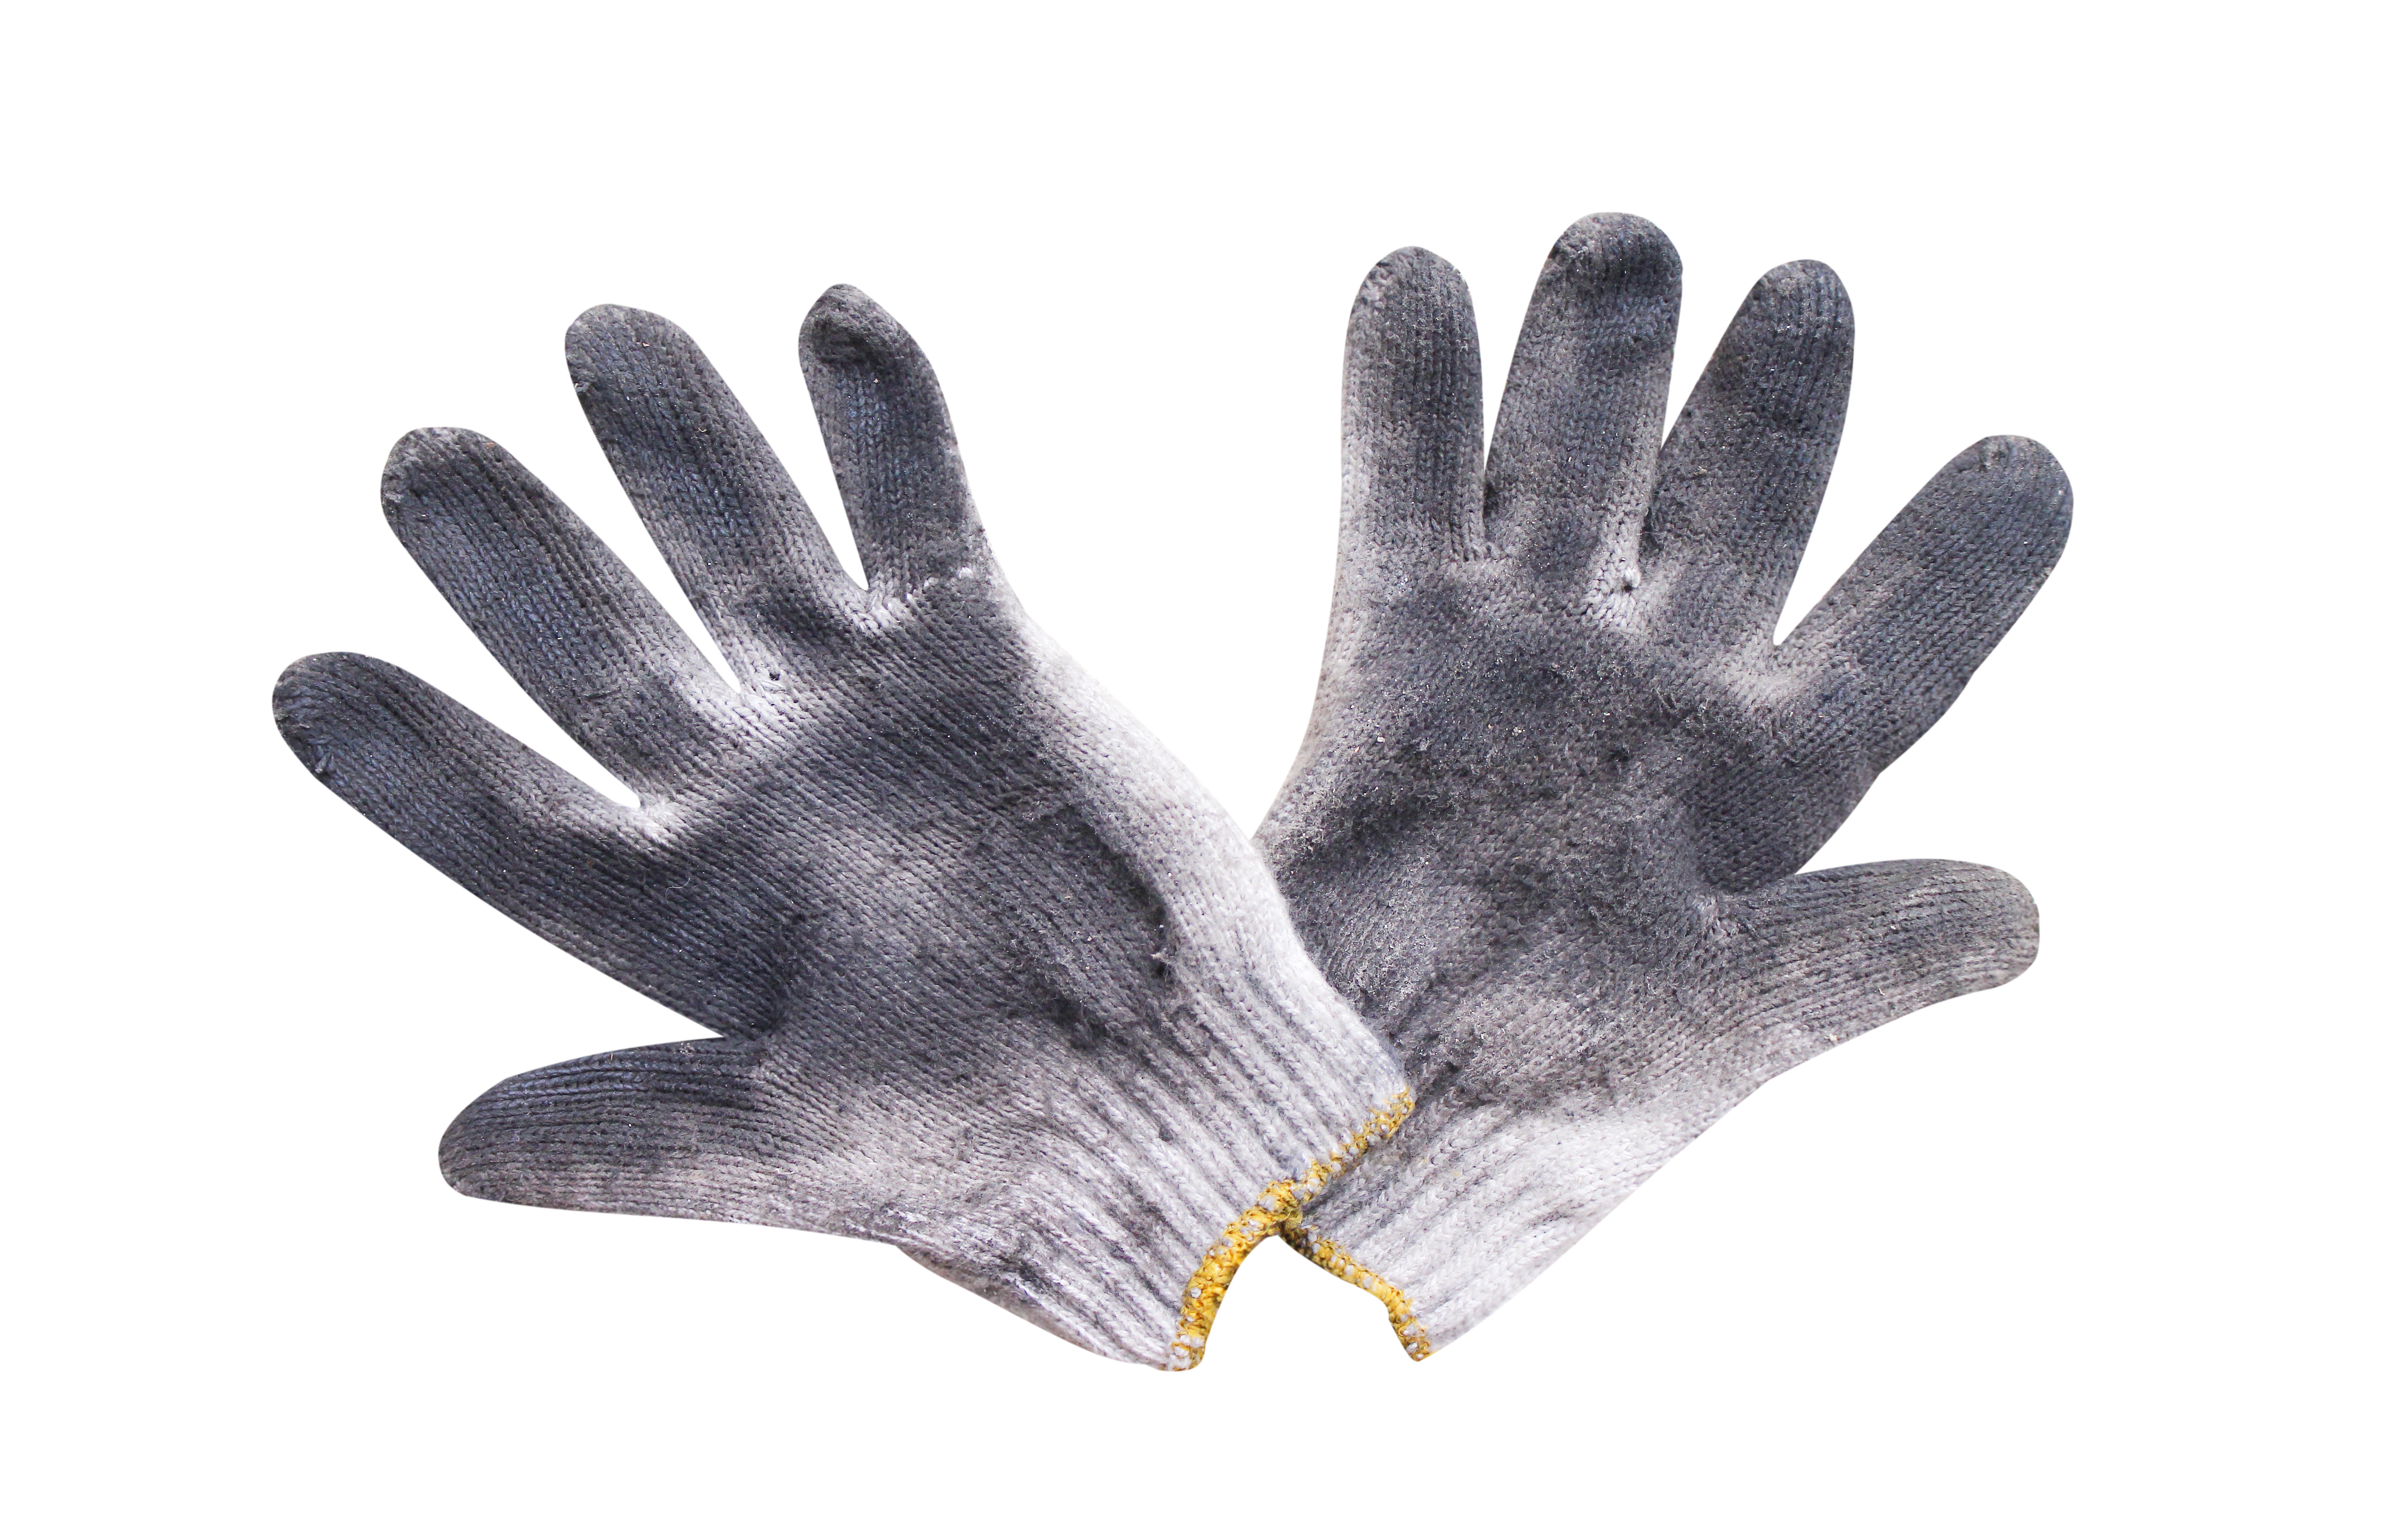 https://www.saftgard.com/images/default-source/default-album/how-to-clean-work-gloves-ri.jpeg?sfvrsn=0